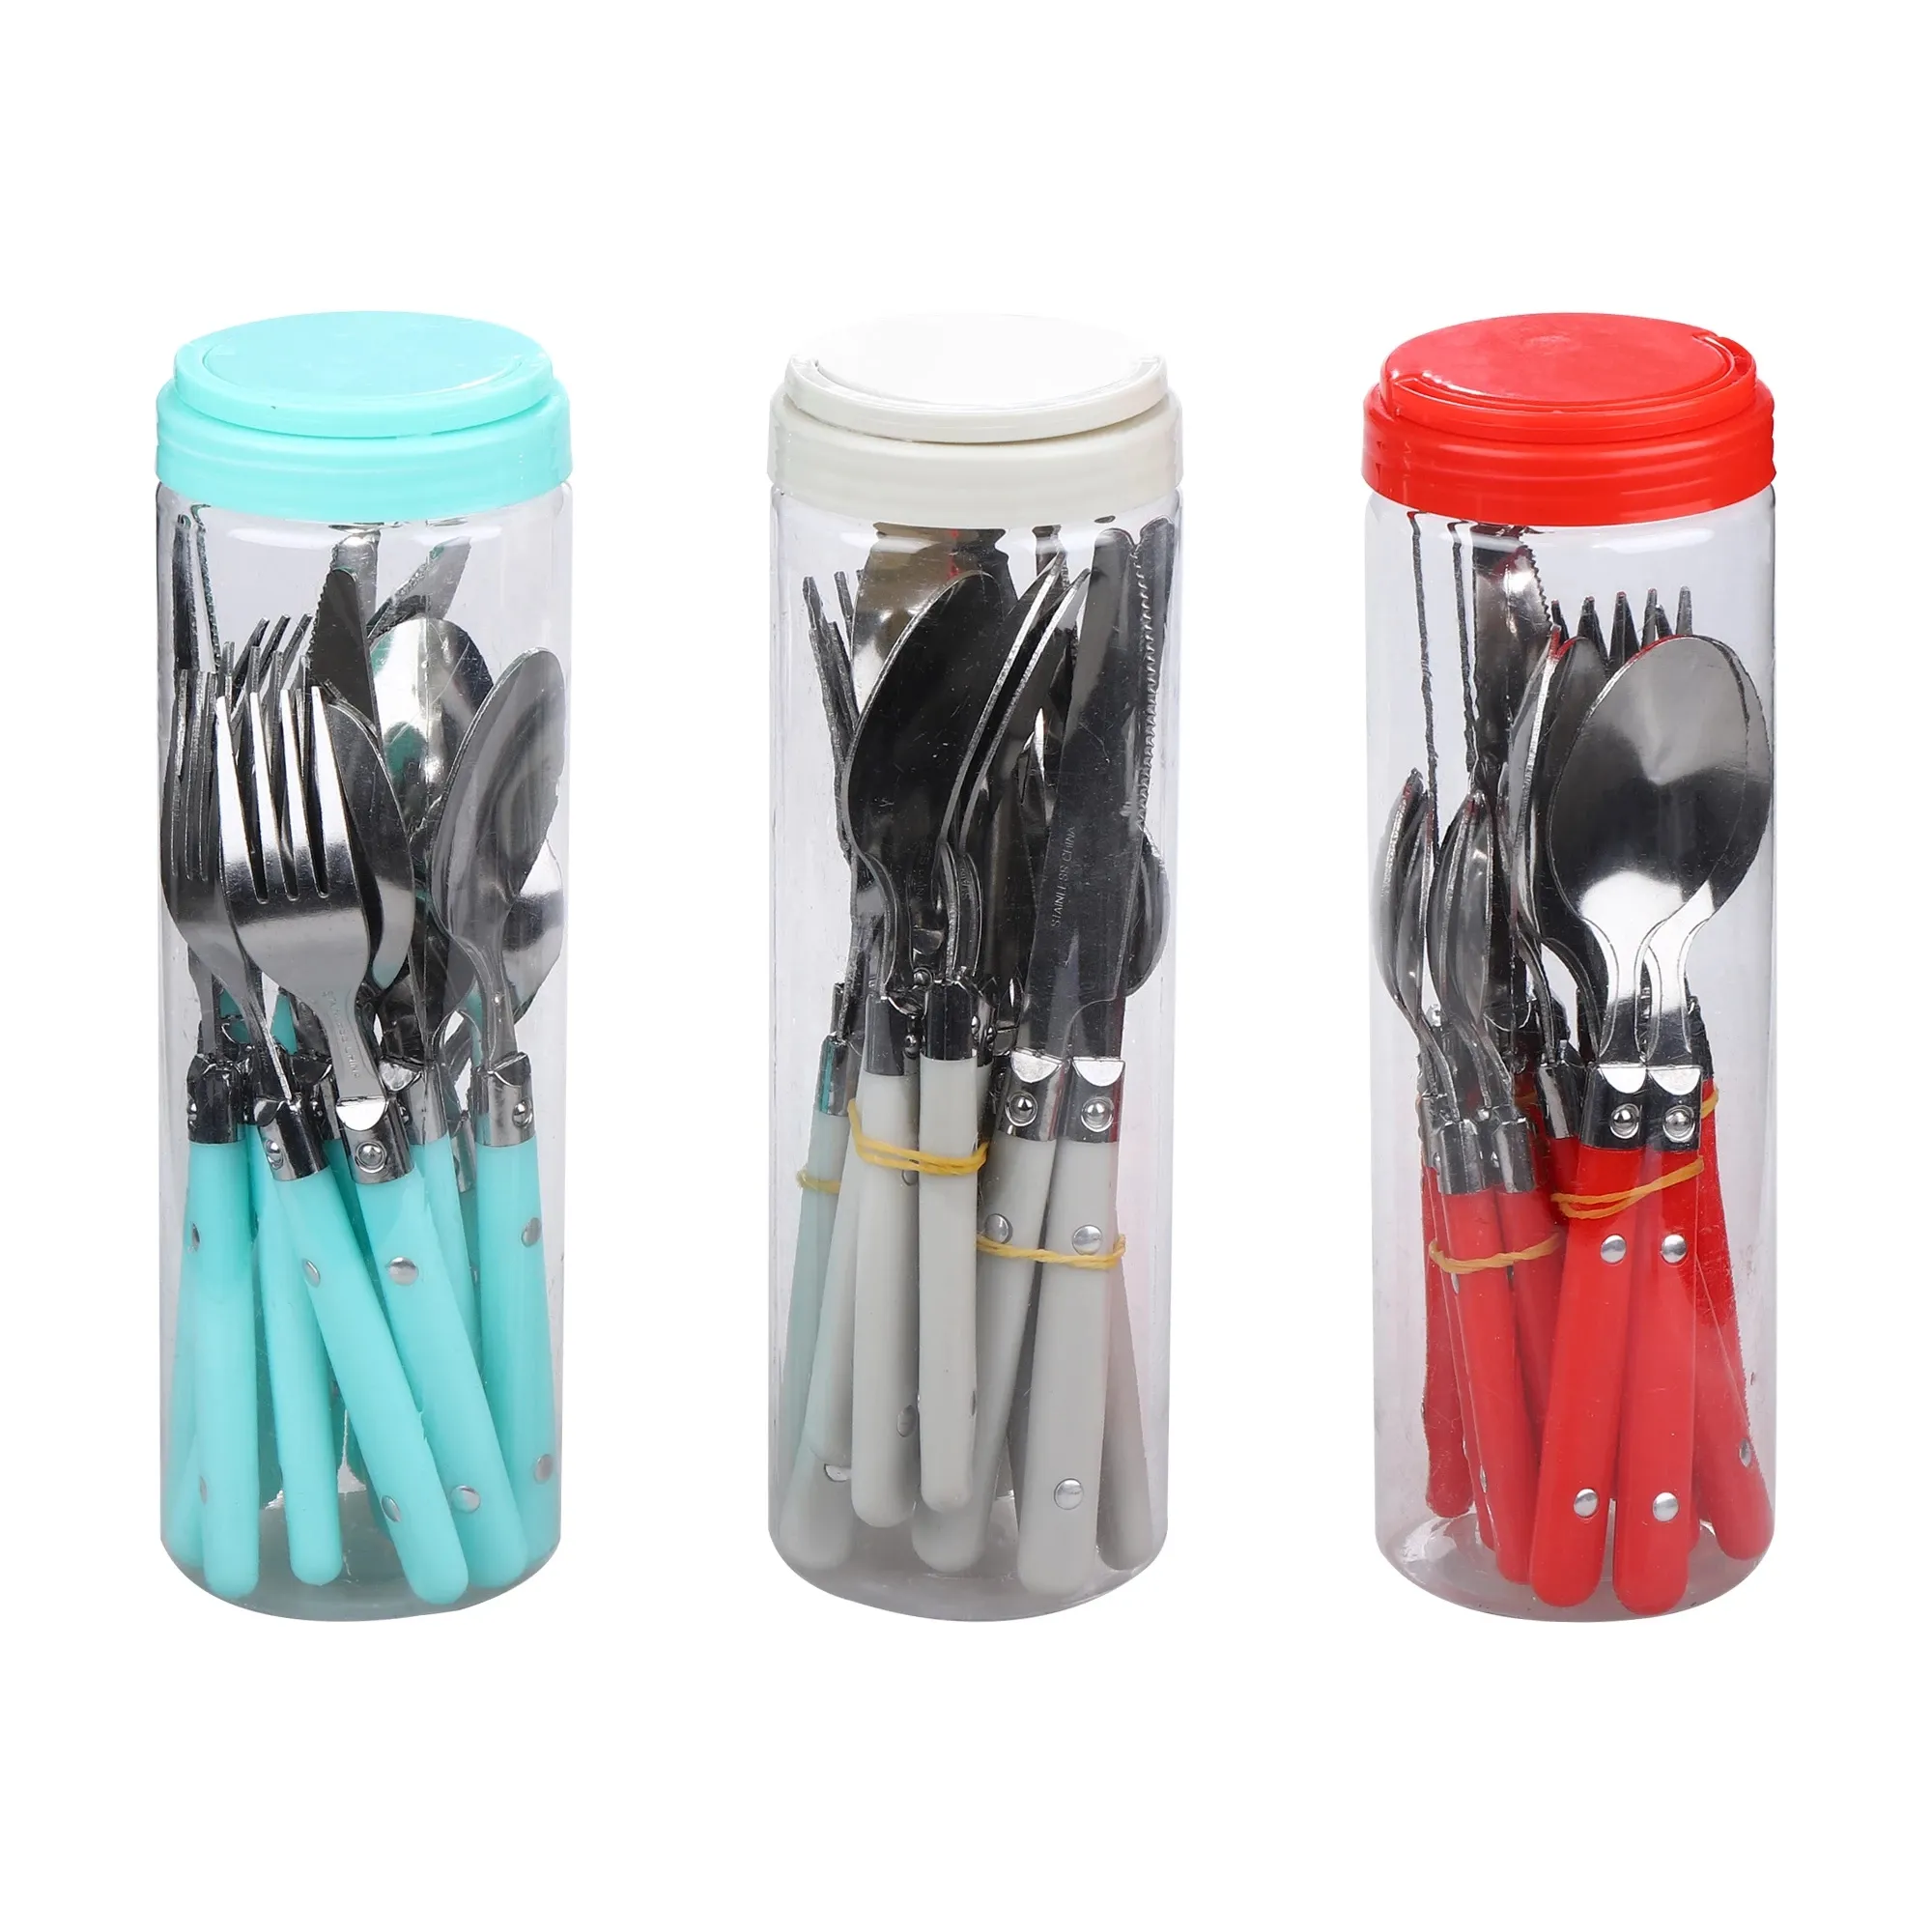 PVC Tube kitchen utensil tableware plastic handle stainless steel cutlery set 12pcs